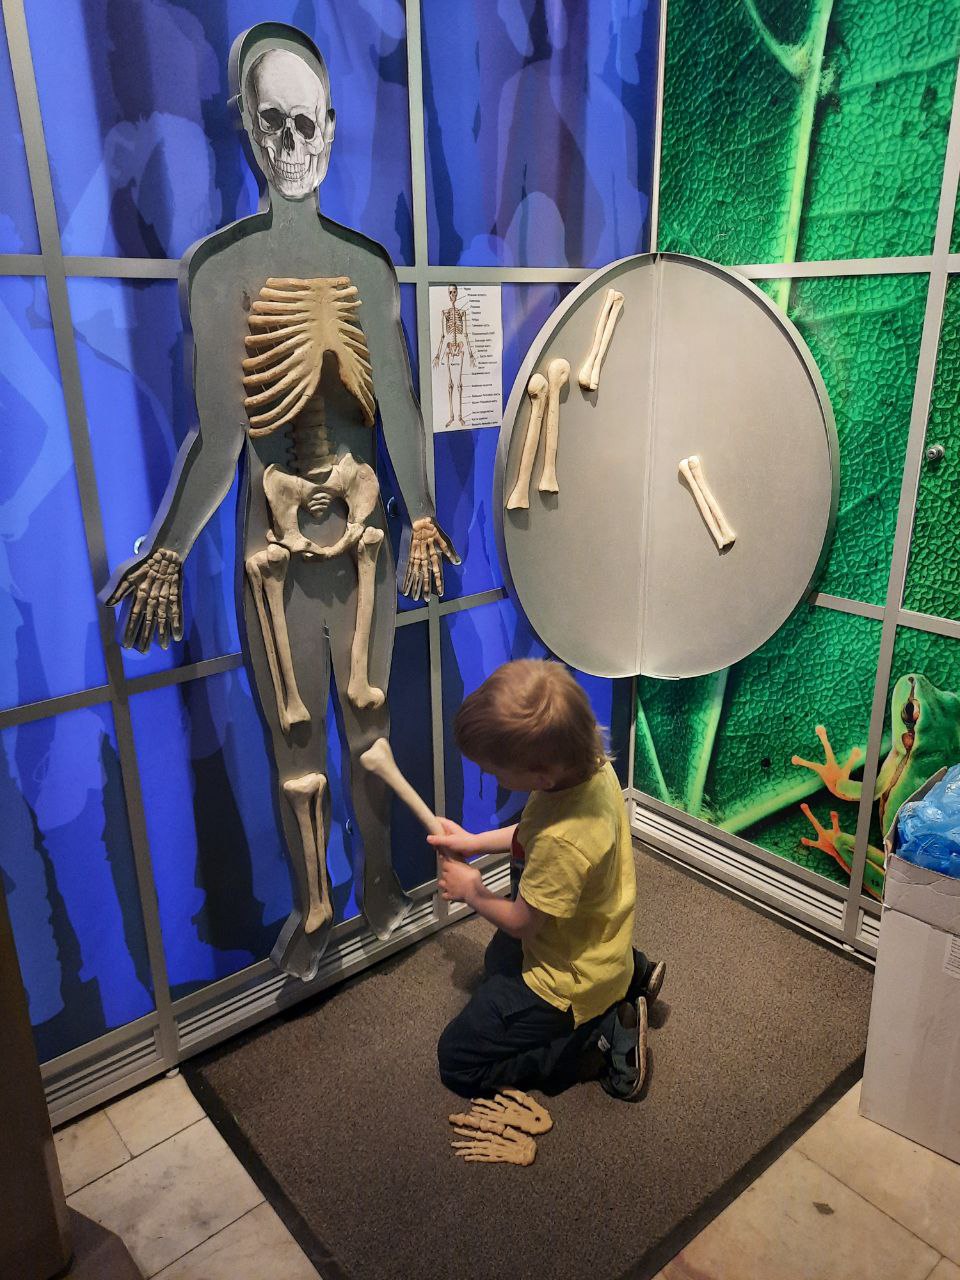 Дарвиновский музей познай себя. Познай себя Познай мир Дарвиновский музей. Мальчик в музее. Образ экспоната из музея. Собрали скелет в музее неправильно.